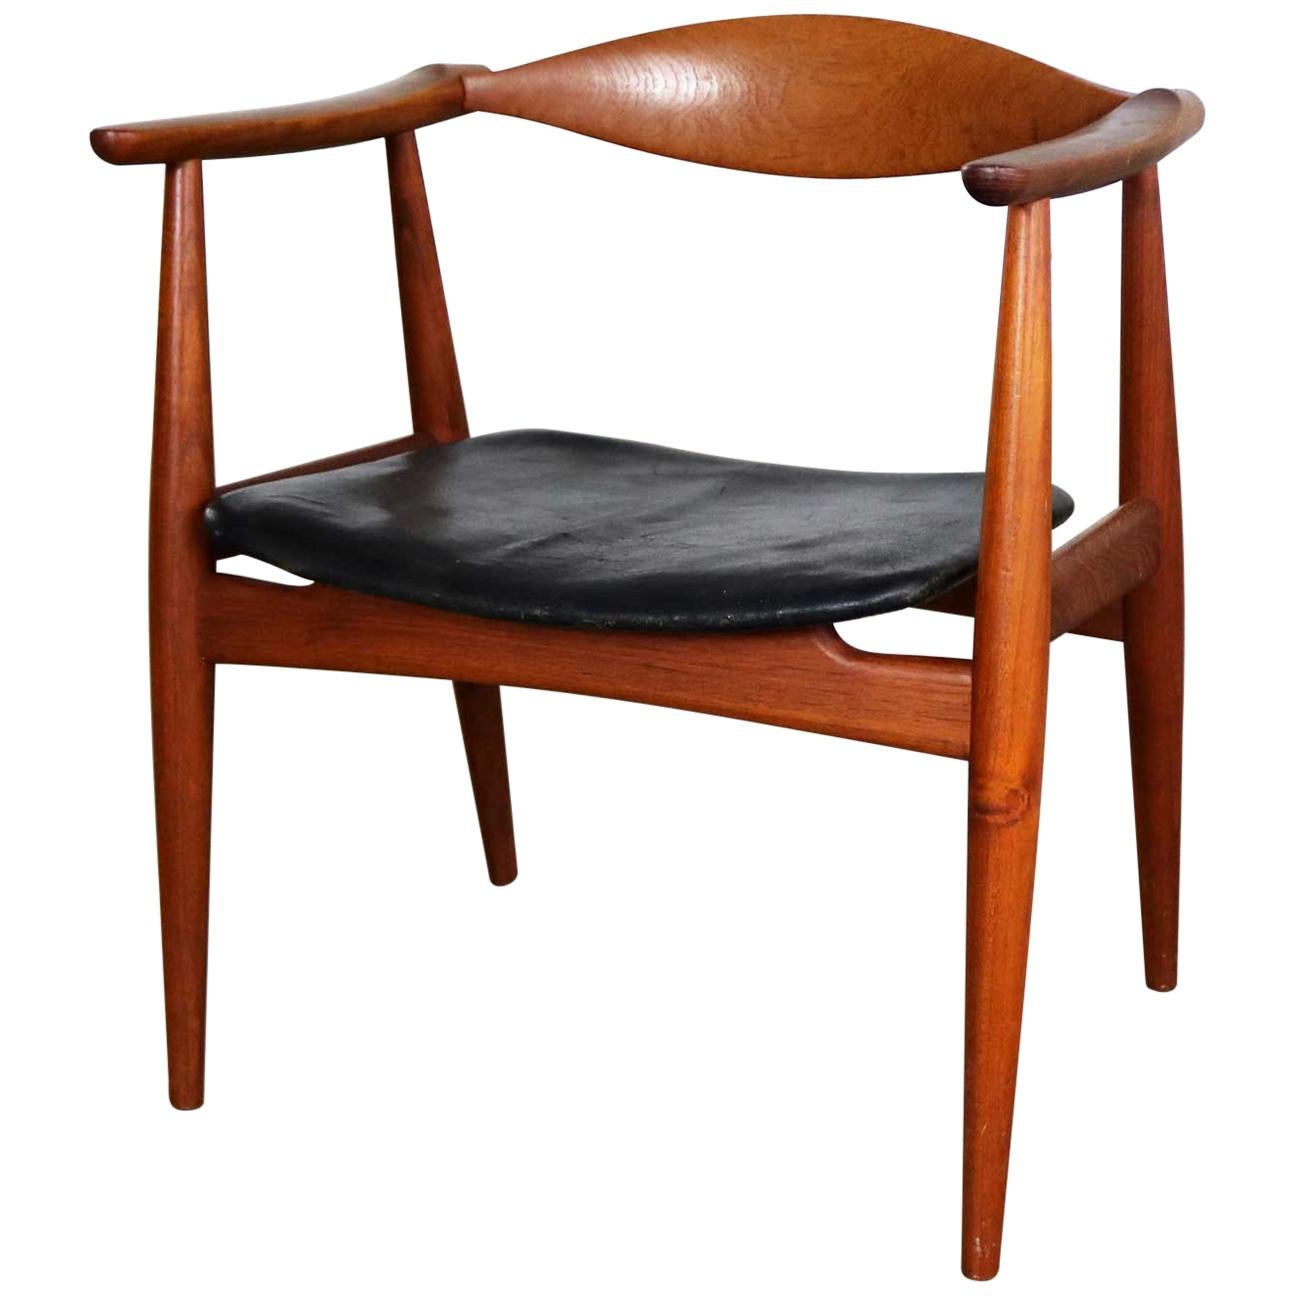 Hans Wegner Teak CH 35 Chair for Carl Hansen & Son Vintage Scandinavian Modern